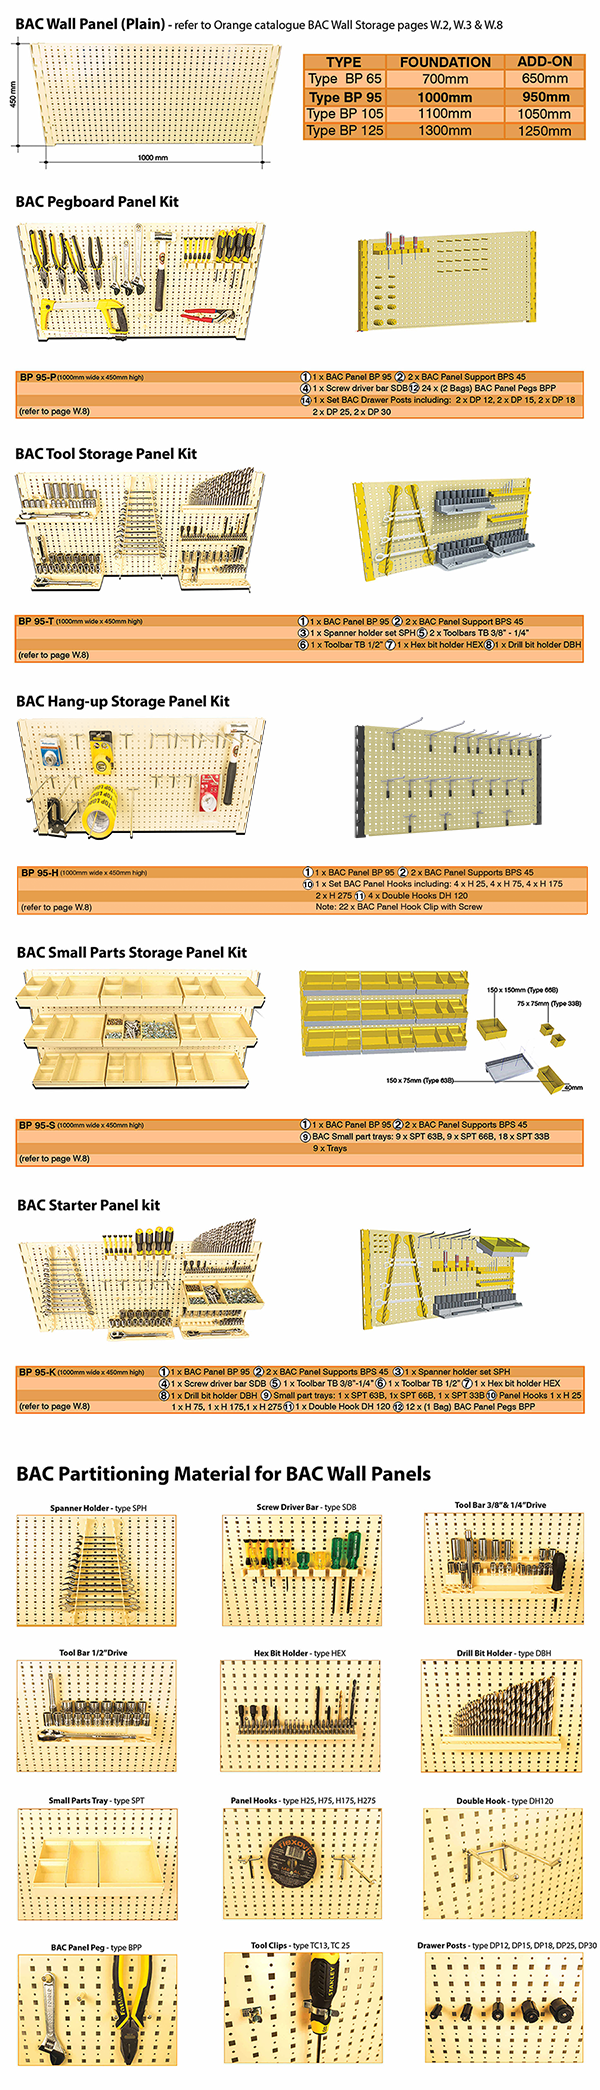 BAC Wall Storage Systems